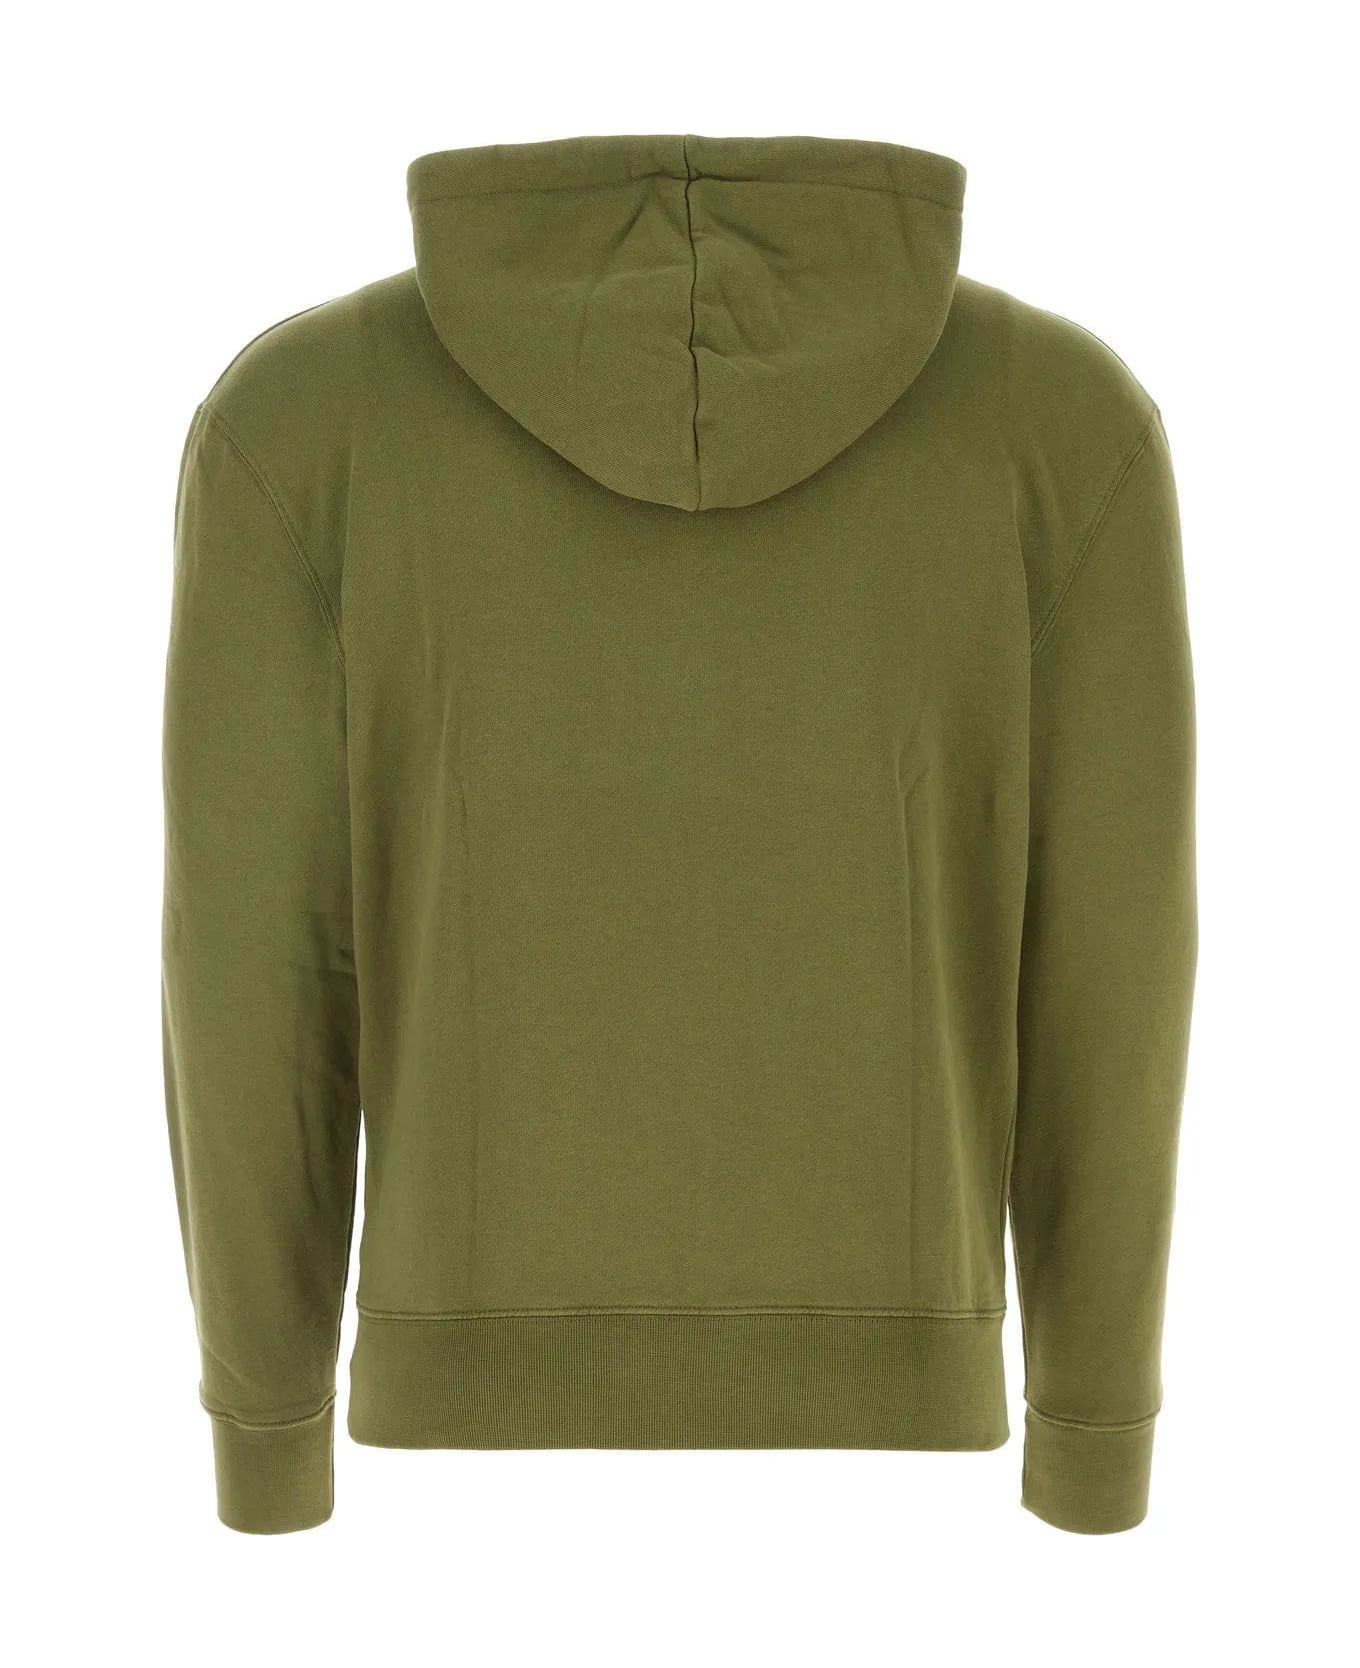 Maison Kitsuné Army Green Cotton Sweatshirt - Verde